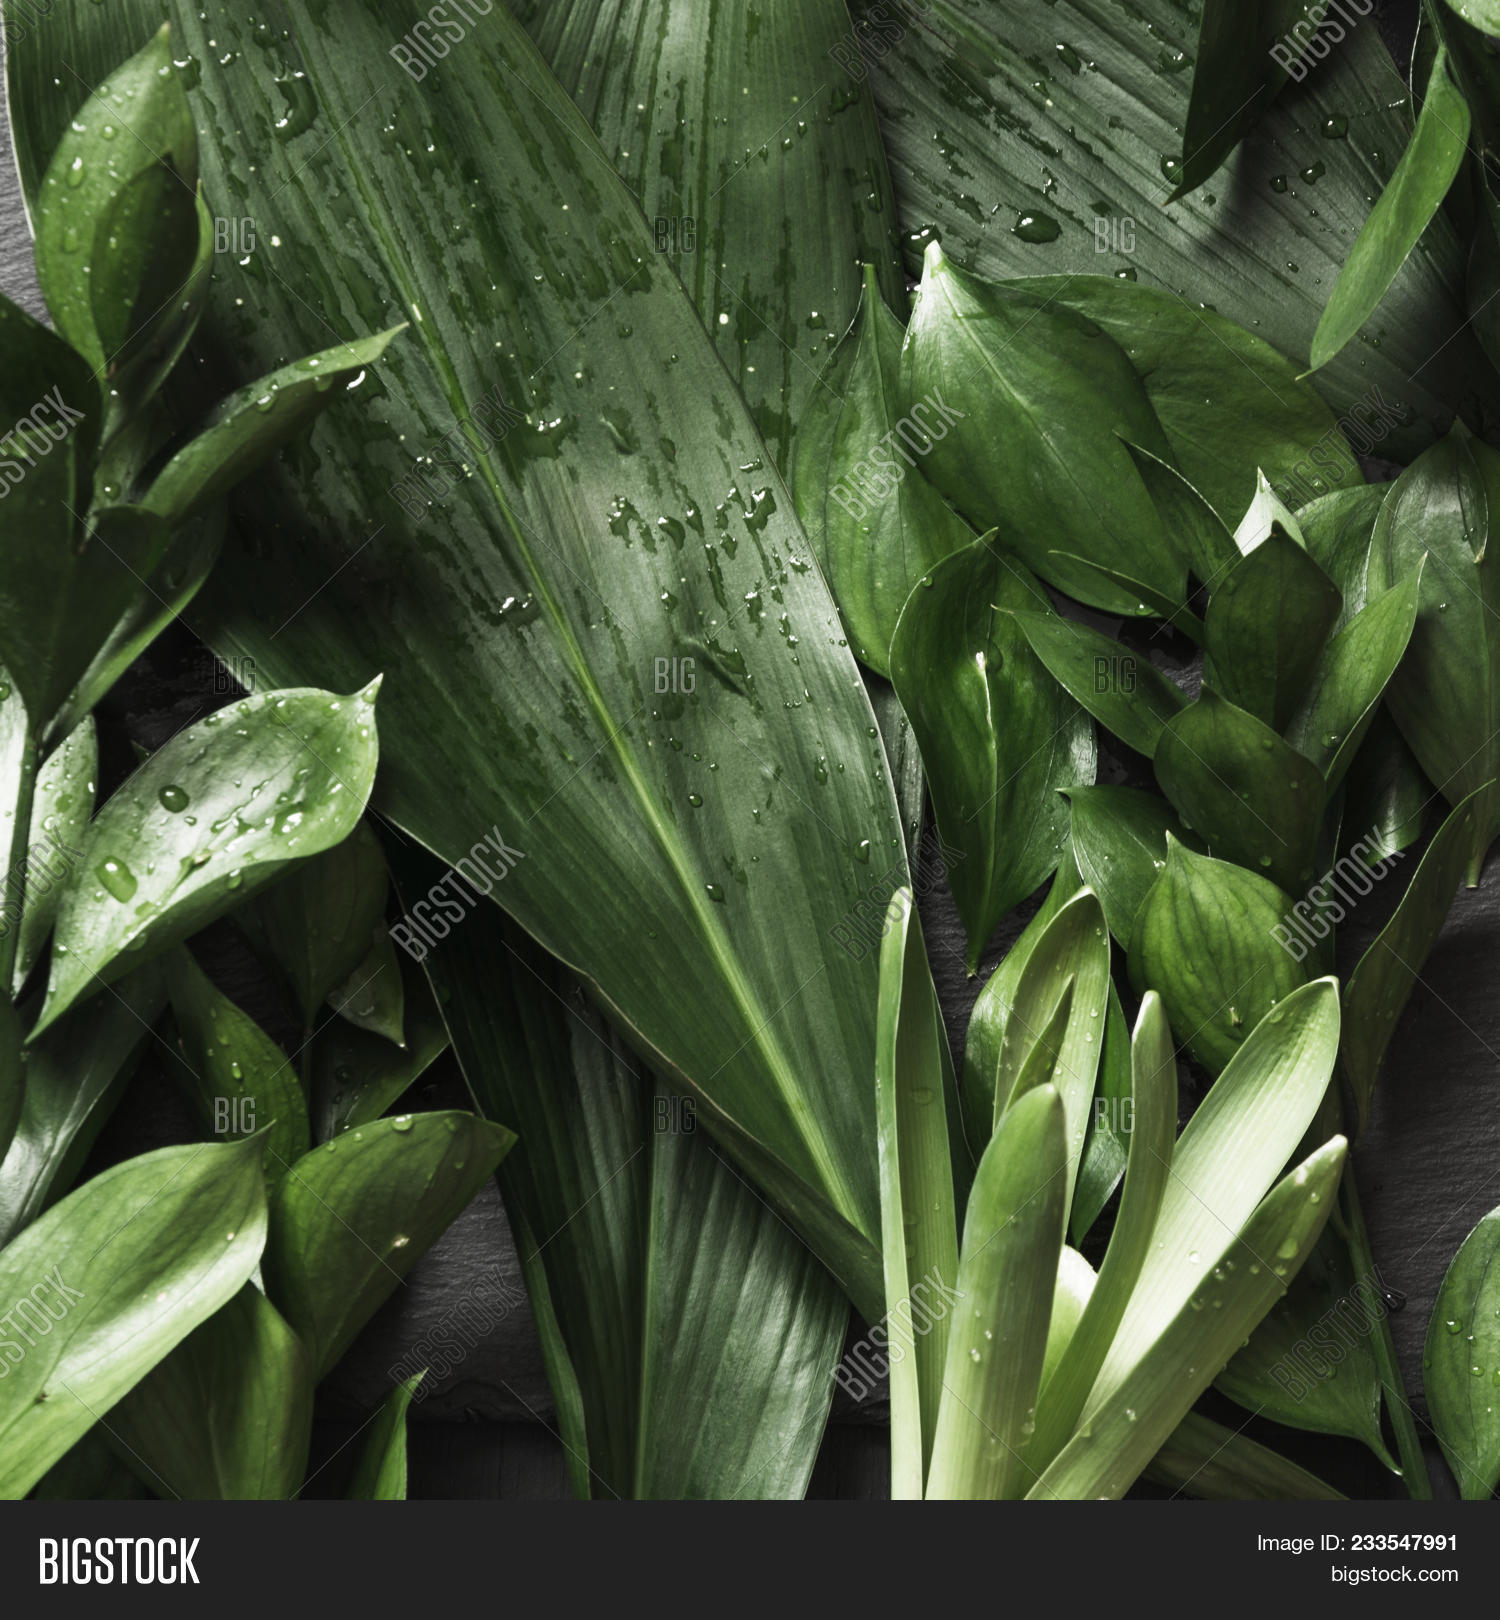 Green Tropical Leafs Raindrops.view Image & Photo | Bigstock